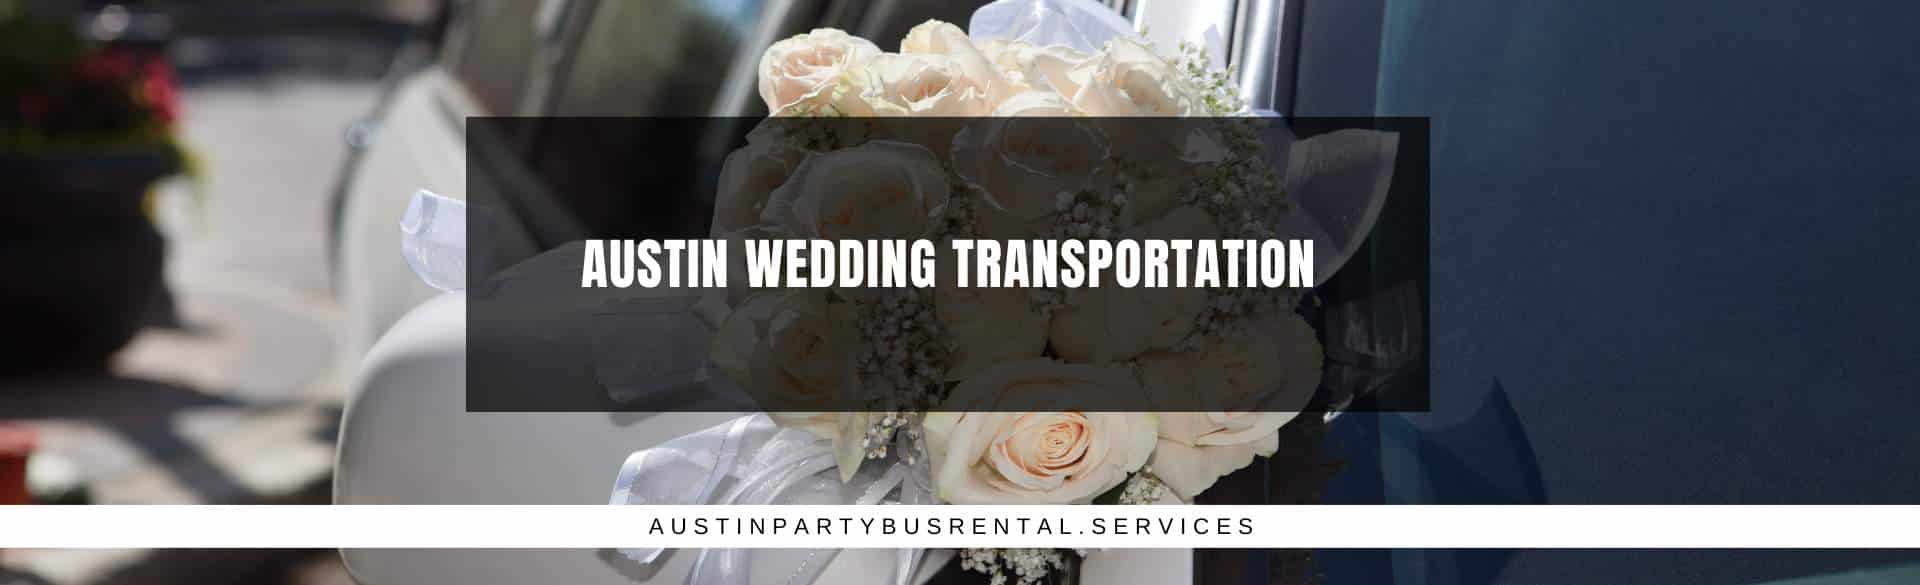 Austin Wedding Transportation